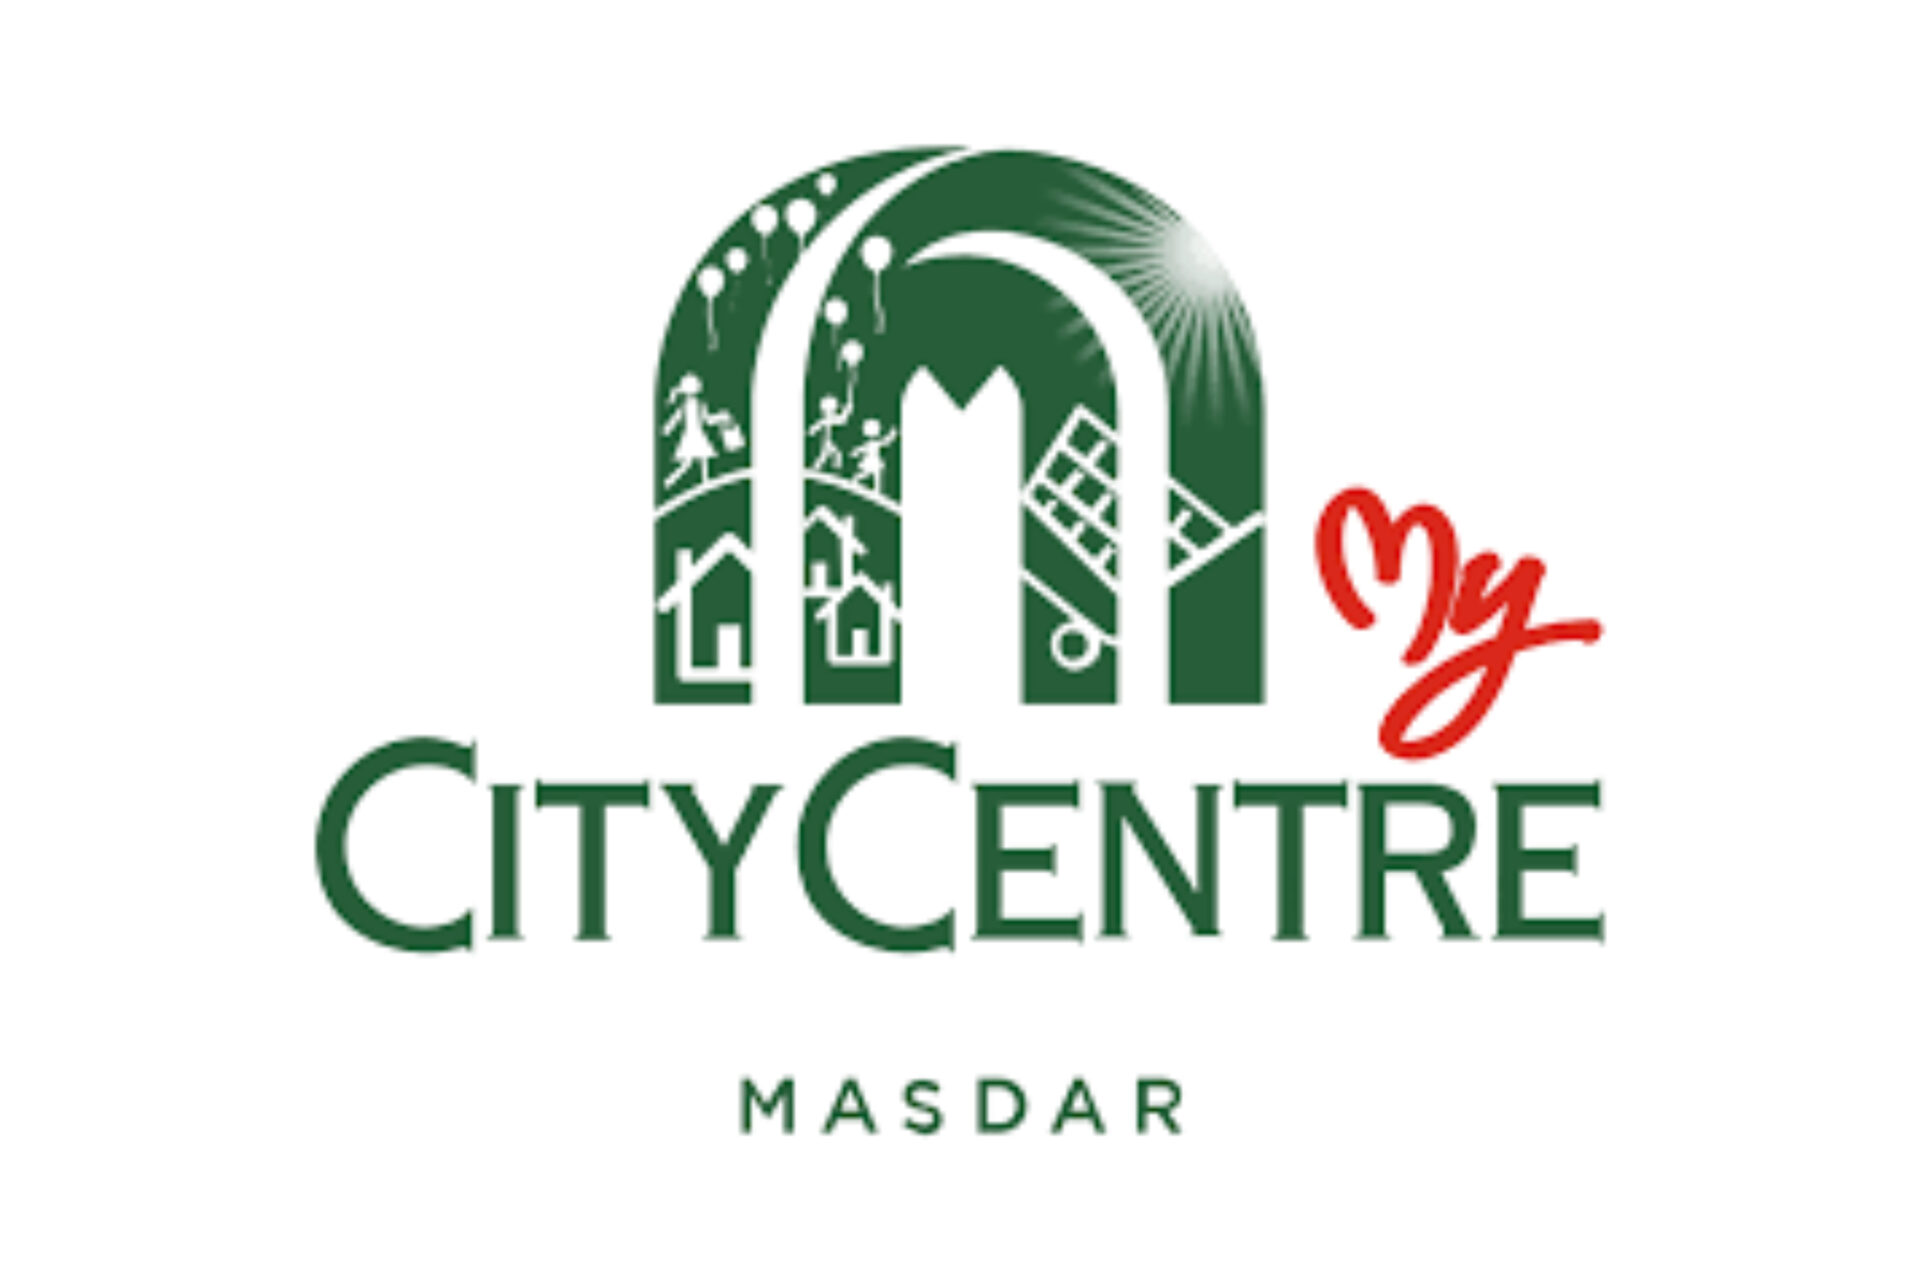 My City Center Masdar Mall Abu Dhabi